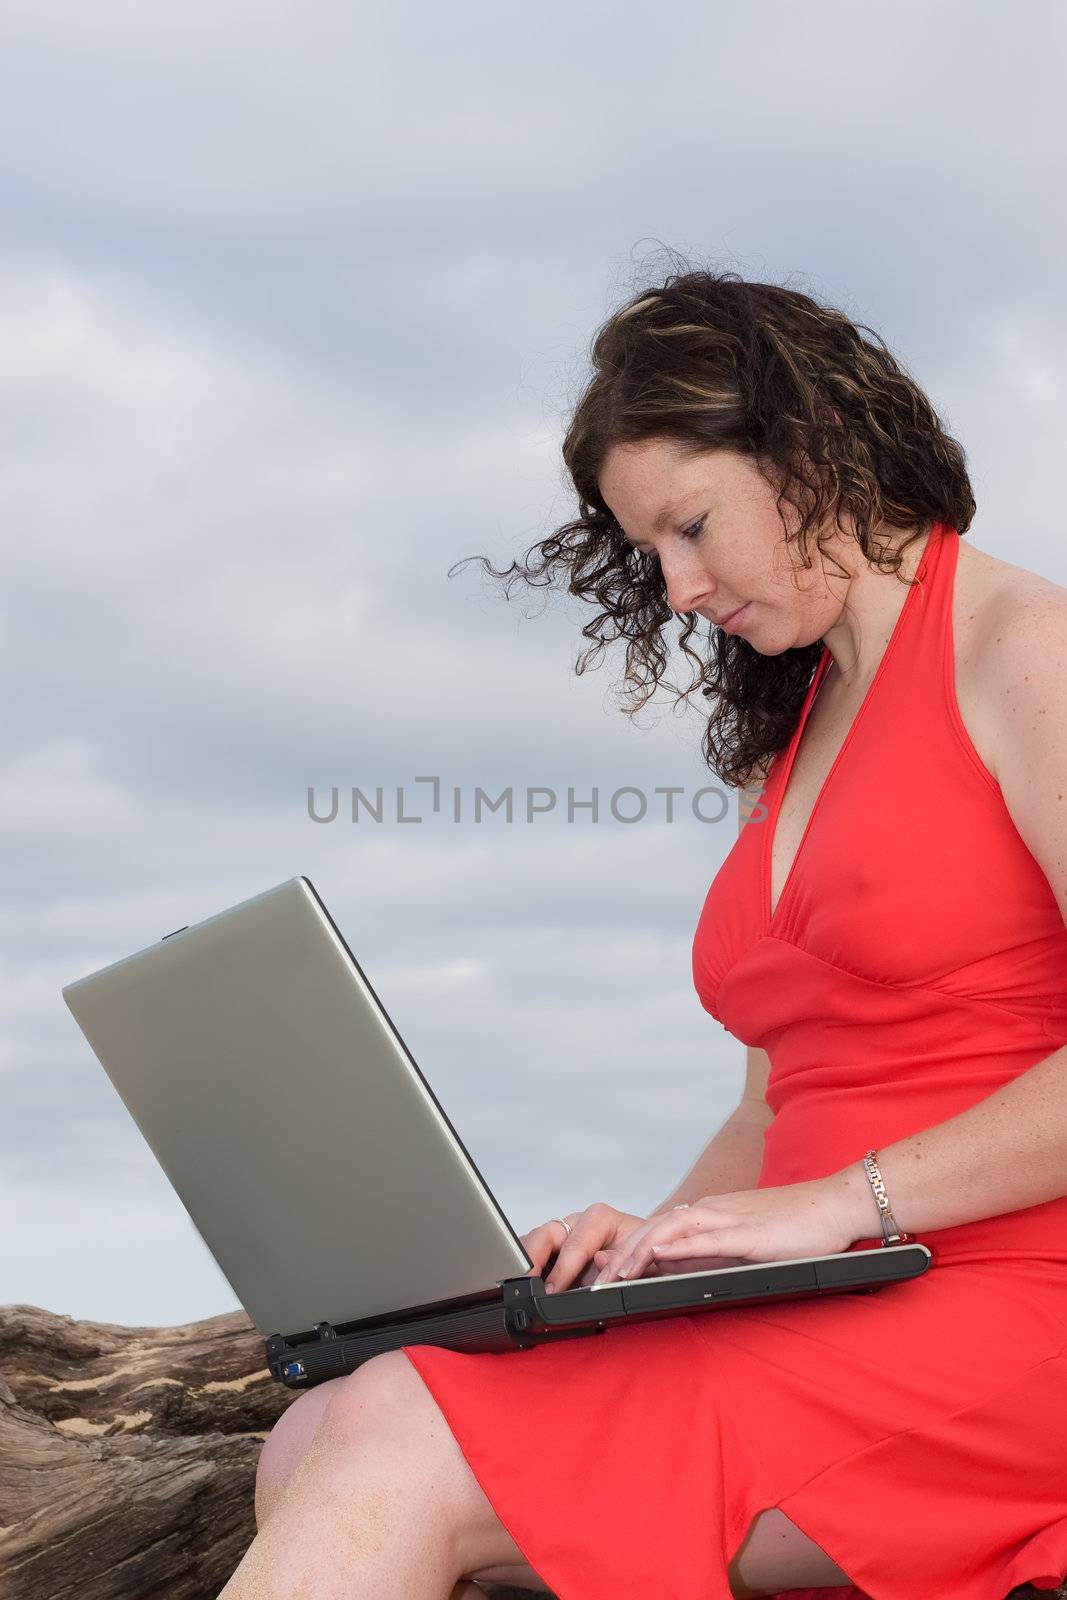 Typing on laptop by nightowlza